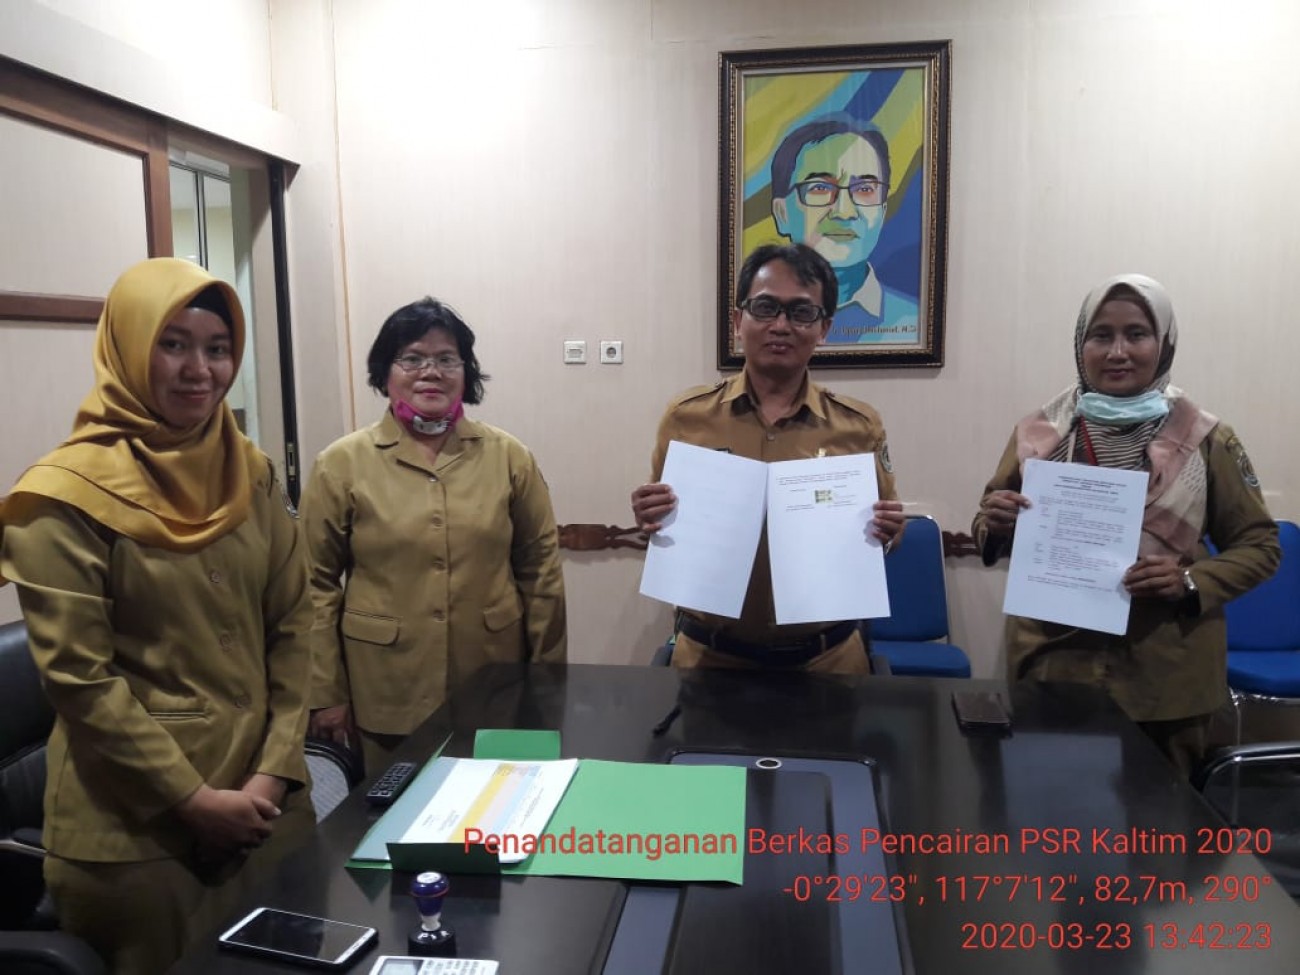 Penandatanganan Berkas Pencairan Peremajaan Sawit Rakyat Kalimantan Timur Tahap 1 Tahun 2020 (Vidcon)